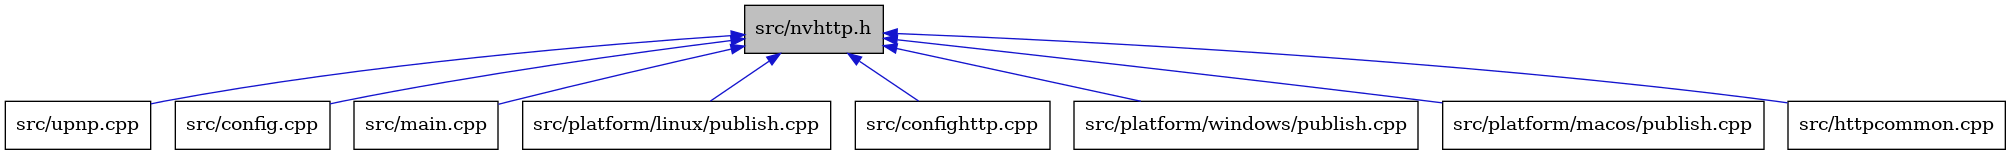 digraph {
    graph [bgcolor="#00000000"]
    node [shape=rectangle style=filled fillcolor="#FFFFFF" font=Helvetica padding=2]
    edge [color="#1414CE"]
    "1" [label="src/nvhttp.h" tooltip="src/nvhttp.h" fillcolor="#BFBFBF"]
    "9" [label="src/upnp.cpp" tooltip="src/upnp.cpp"]
    "2" [label="src/config.cpp" tooltip="src/config.cpp"]
    "5" [label="src/main.cpp" tooltip="src/main.cpp"]
    "6" [label="src/platform/linux/publish.cpp" tooltip="src/platform/linux/publish.cpp"]
    "3" [label="src/confighttp.cpp" tooltip="src/confighttp.cpp"]
    "8" [label="src/platform/windows/publish.cpp" tooltip="src/platform/windows/publish.cpp"]
    "7" [label="src/platform/macos/publish.cpp" tooltip="src/platform/macos/publish.cpp"]
    "4" [label="src/httpcommon.cpp" tooltip="src/httpcommon.cpp"]
    "1" -> "2" [dir=back tooltip="include"]
    "1" -> "3" [dir=back tooltip="include"]
    "1" -> "4" [dir=back tooltip="include"]
    "1" -> "5" [dir=back tooltip="include"]
    "1" -> "6" [dir=back tooltip="include"]
    "1" -> "7" [dir=back tooltip="include"]
    "1" -> "8" [dir=back tooltip="include"]
    "1" -> "9" [dir=back tooltip="include"]
}